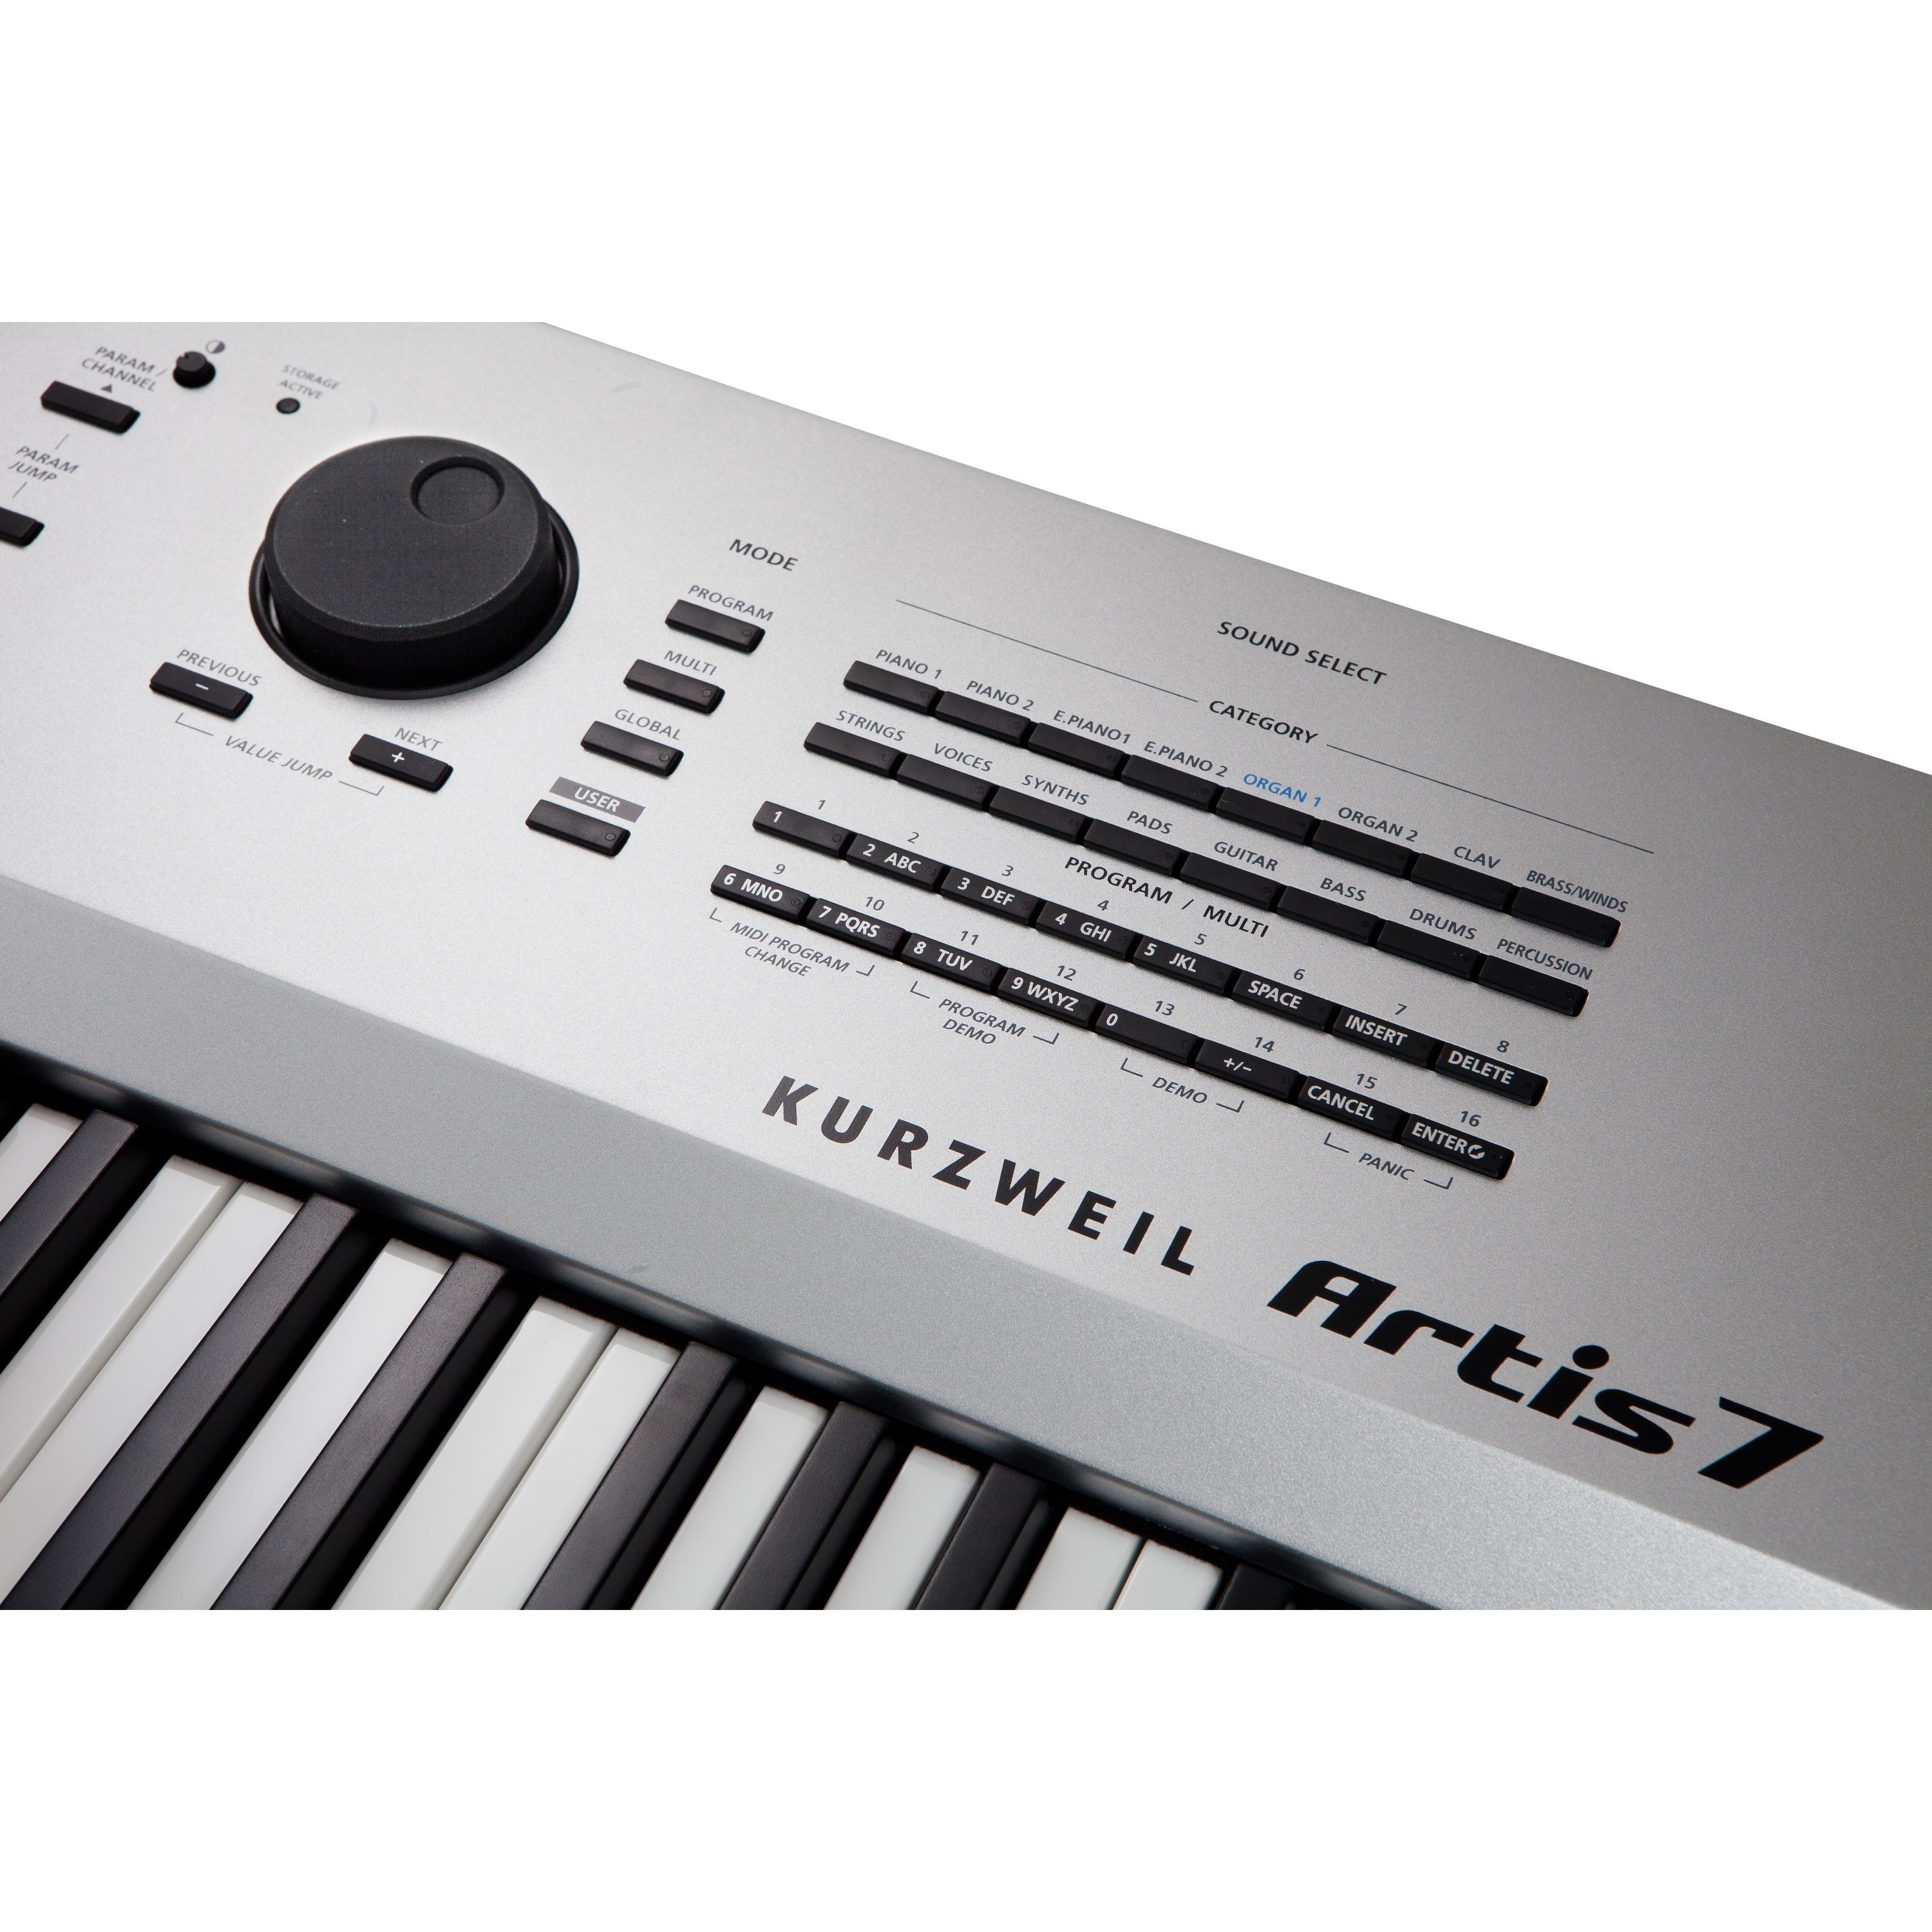 Цифровое пианино Kurzweil Artis 7